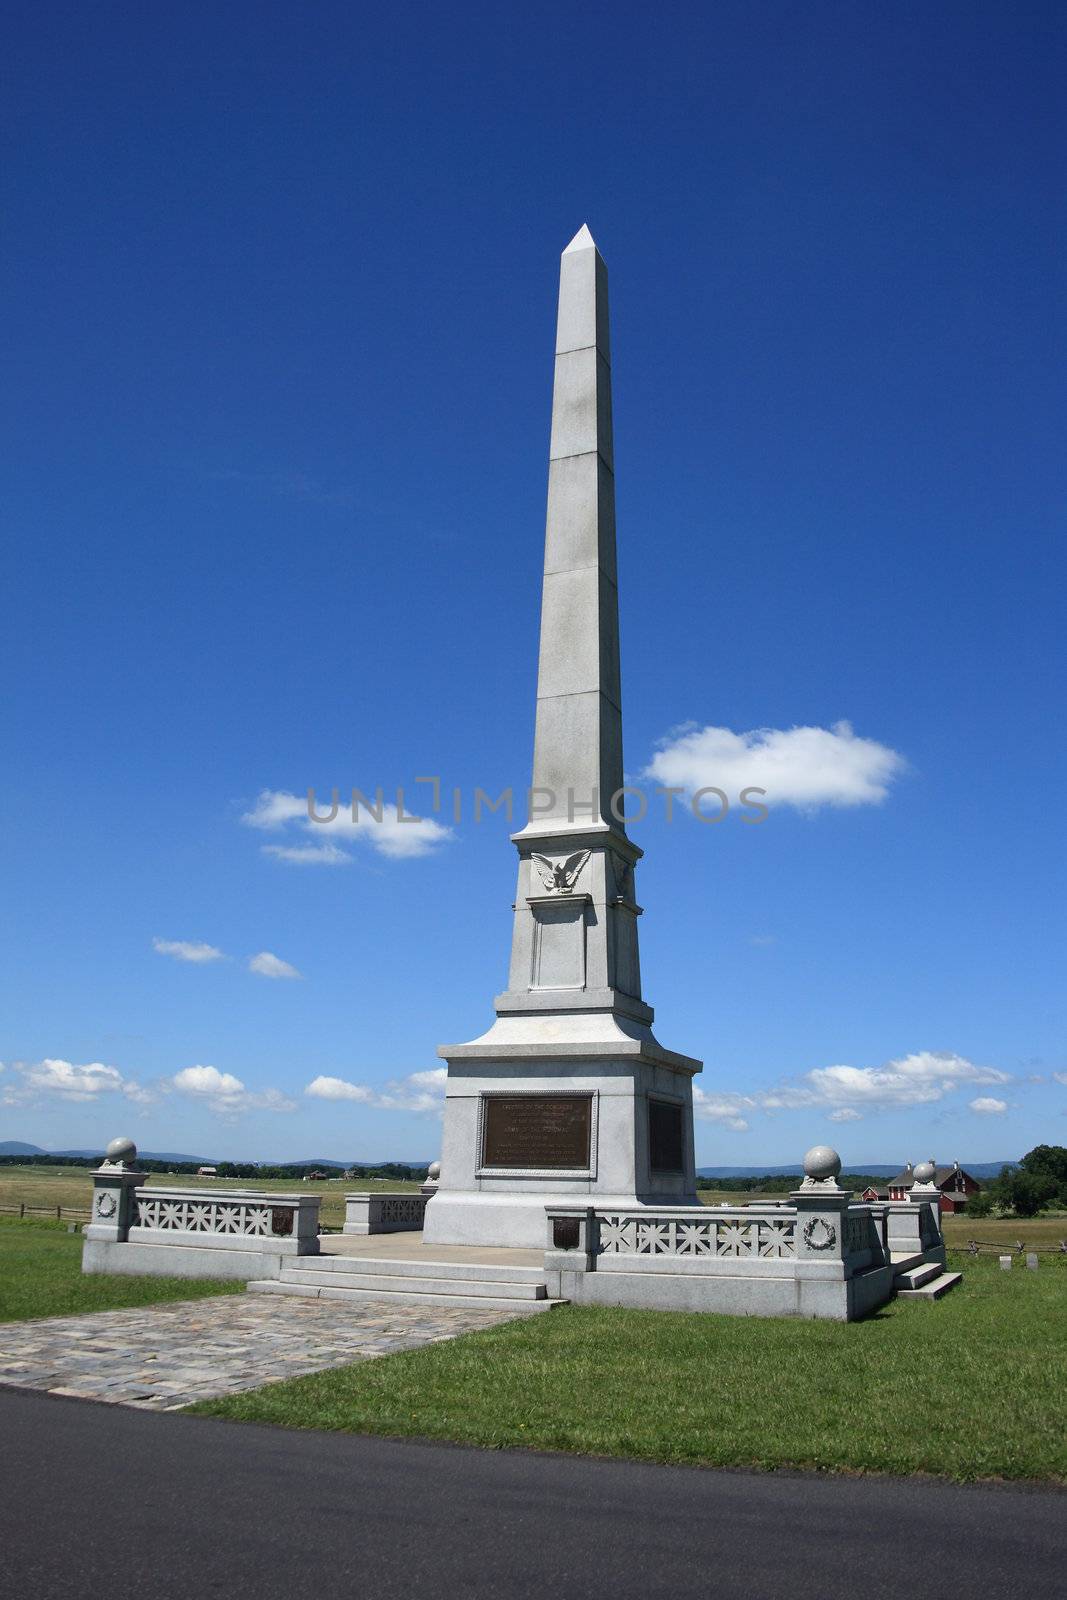 Monument on Cemetery Ridge overlooks battle site at Gettysburg National Military Park